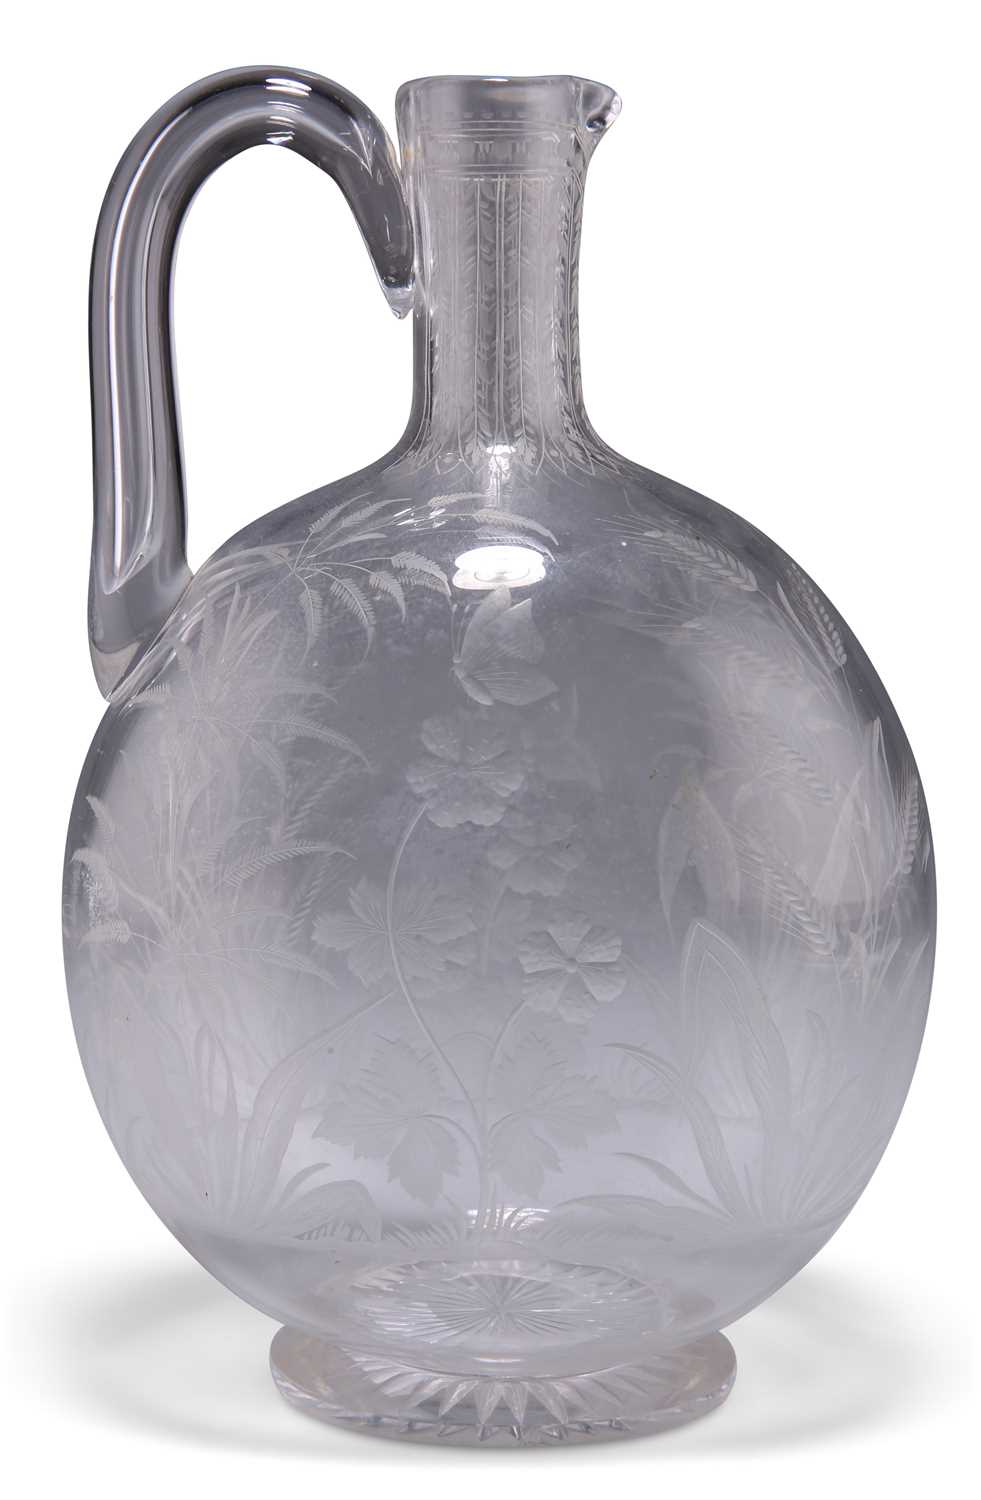 A GLASS CLARET JUG, CIRCA 1870